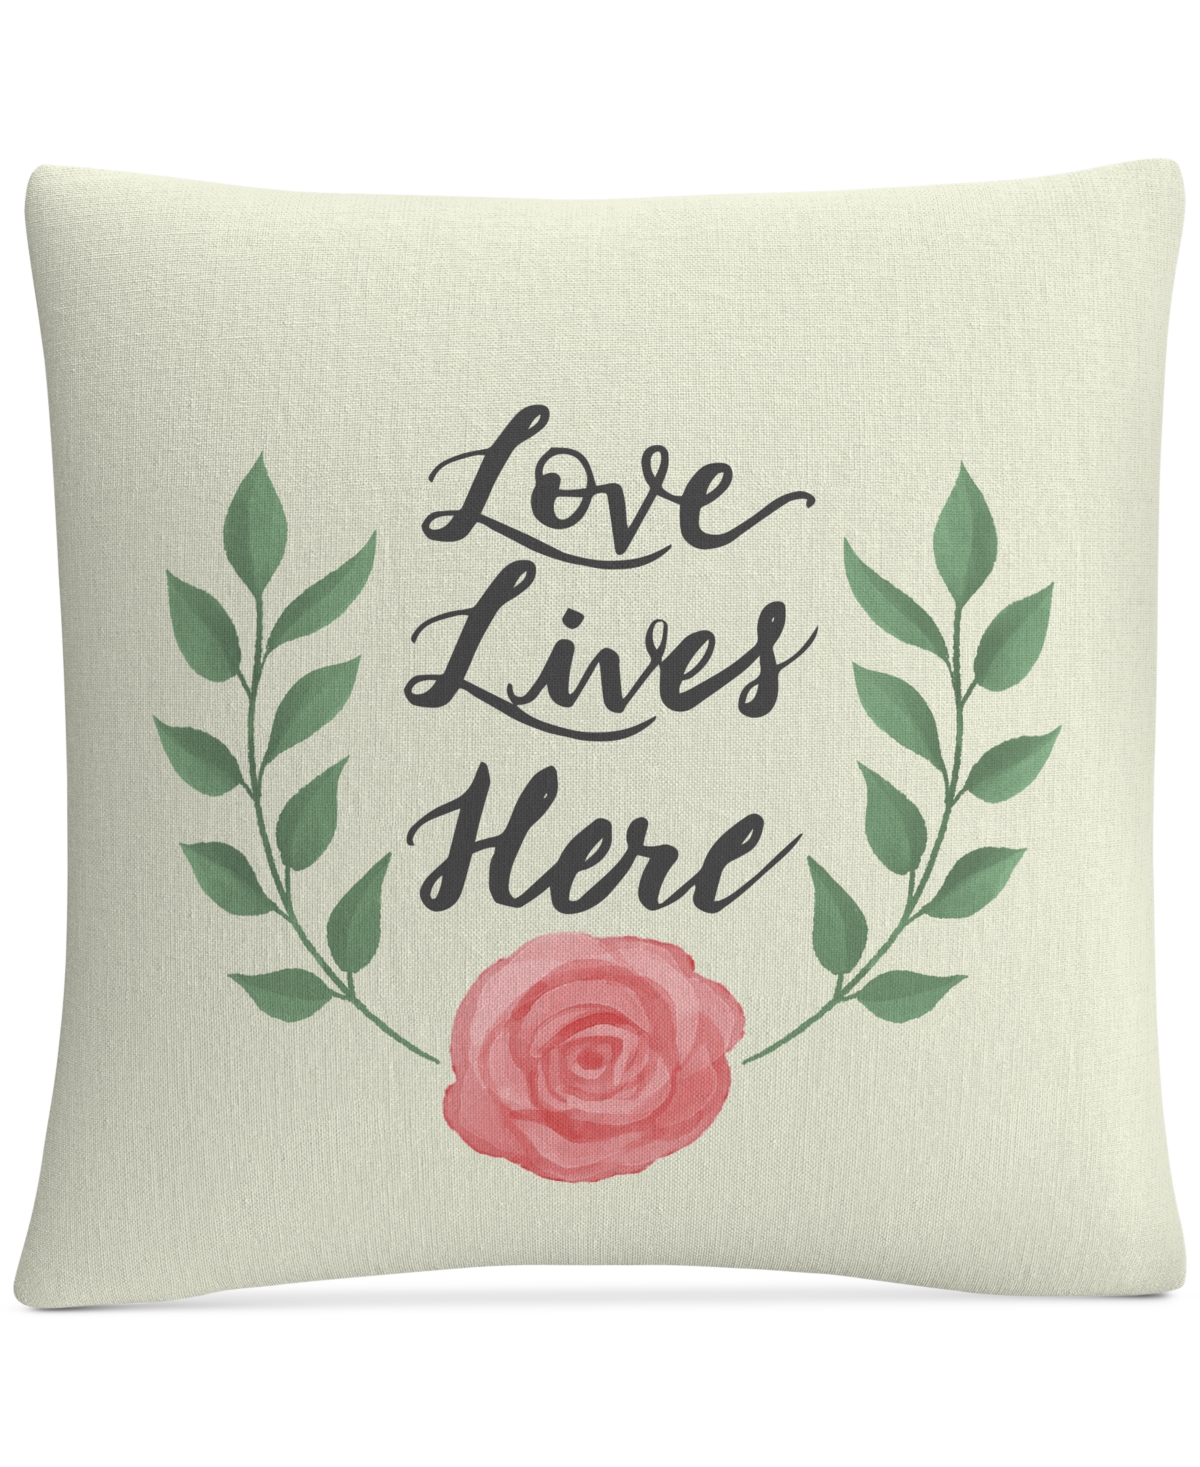 Abc Love Lives Here Decorative Pillow, 16 x 16